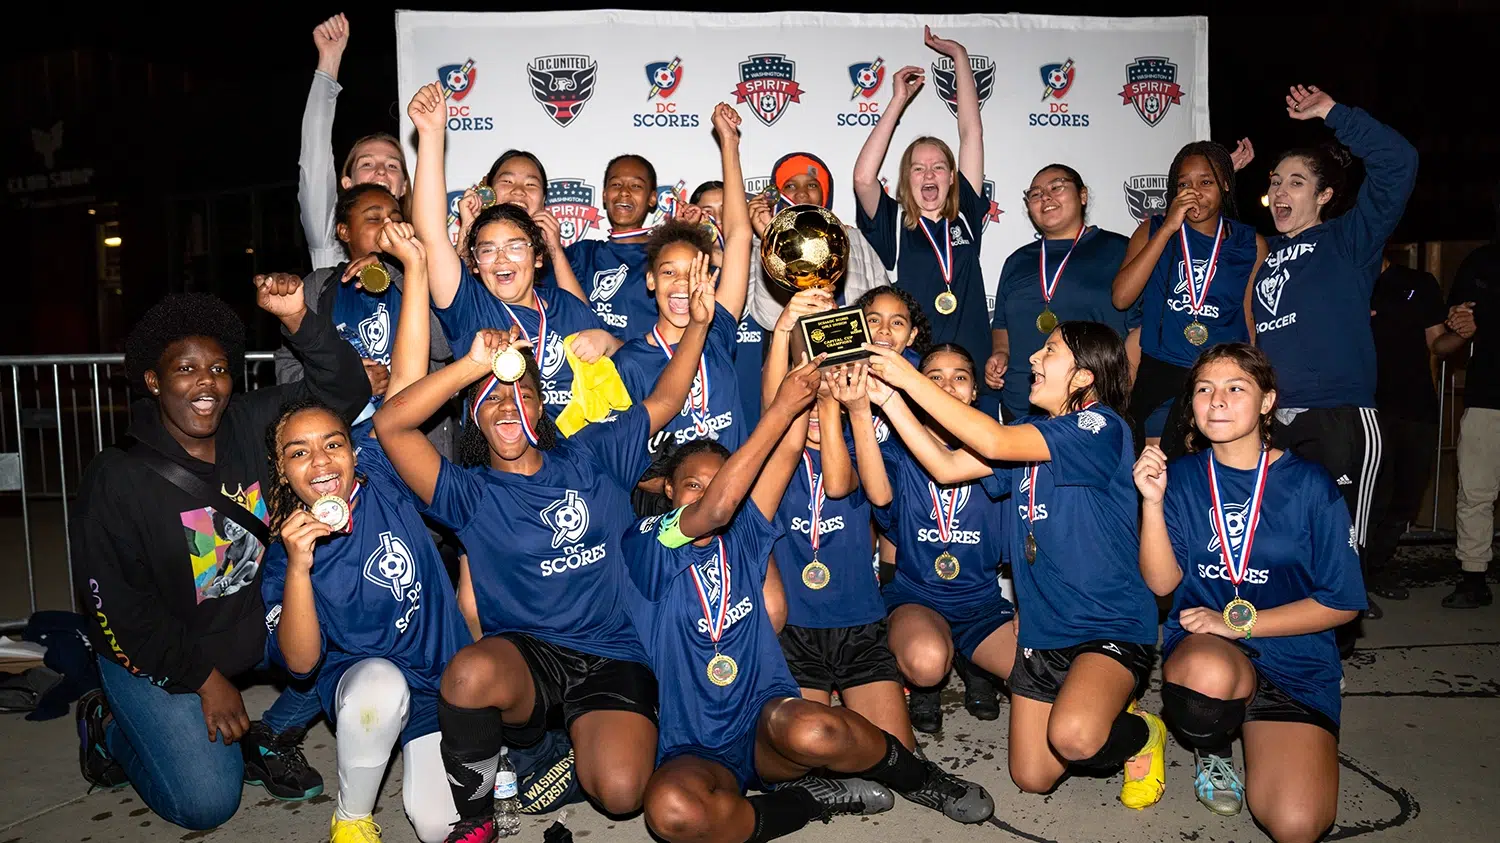 Members of the Ida B. Wells Middle School girls soccer team celebrate winning the championship.